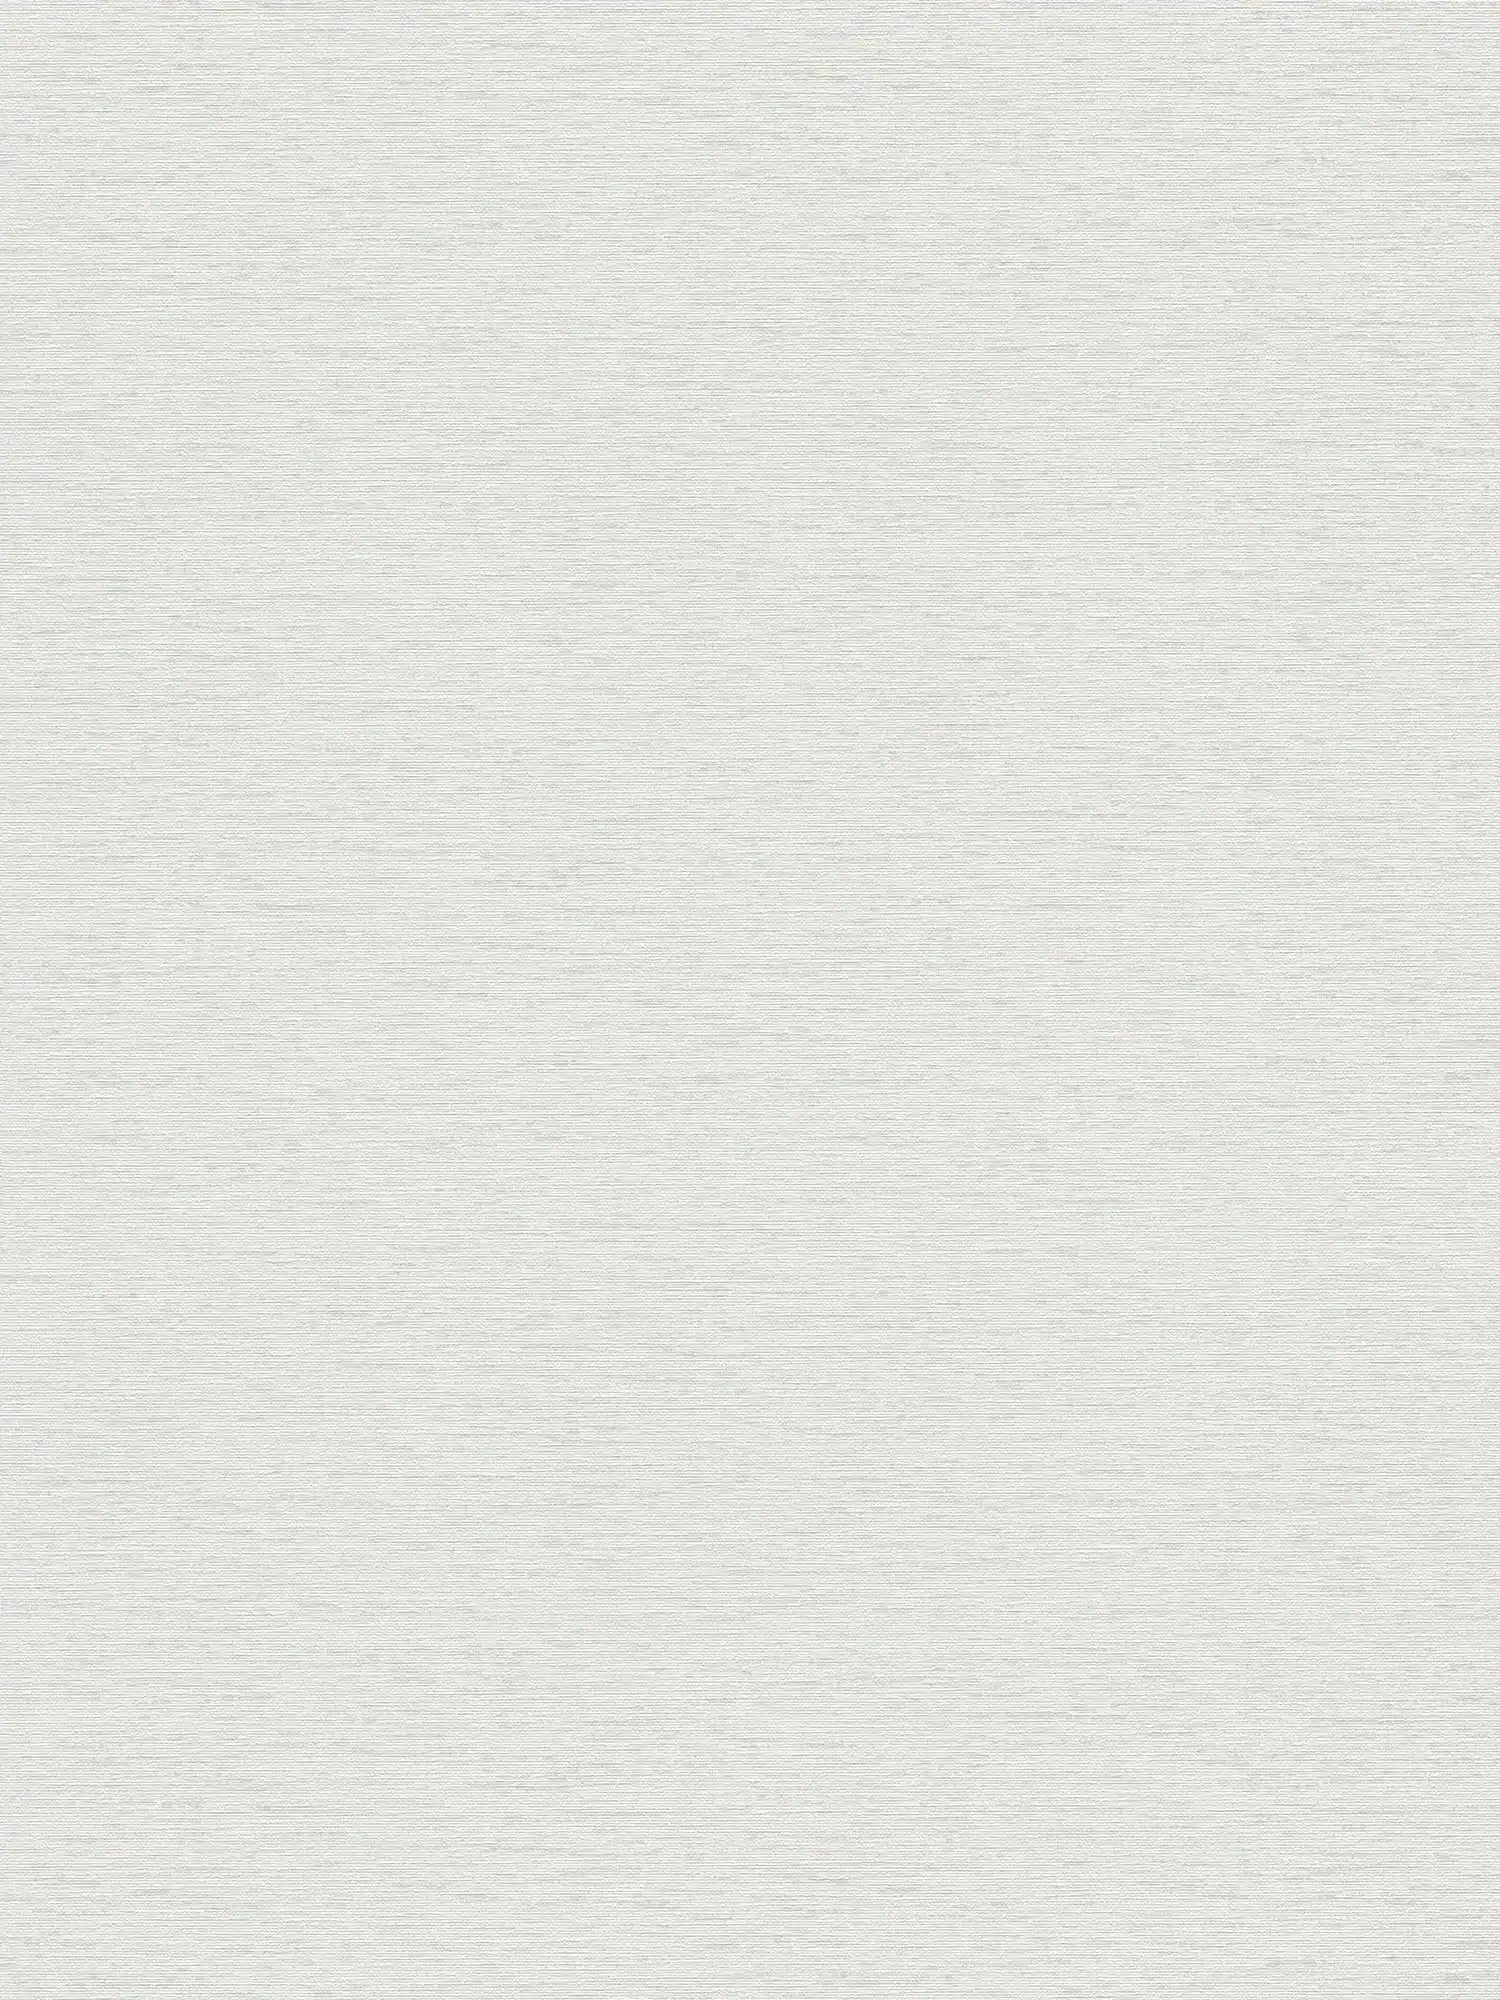         Papel pintado no tejido liso con estructura textil, mate - blanco, gris claro
    